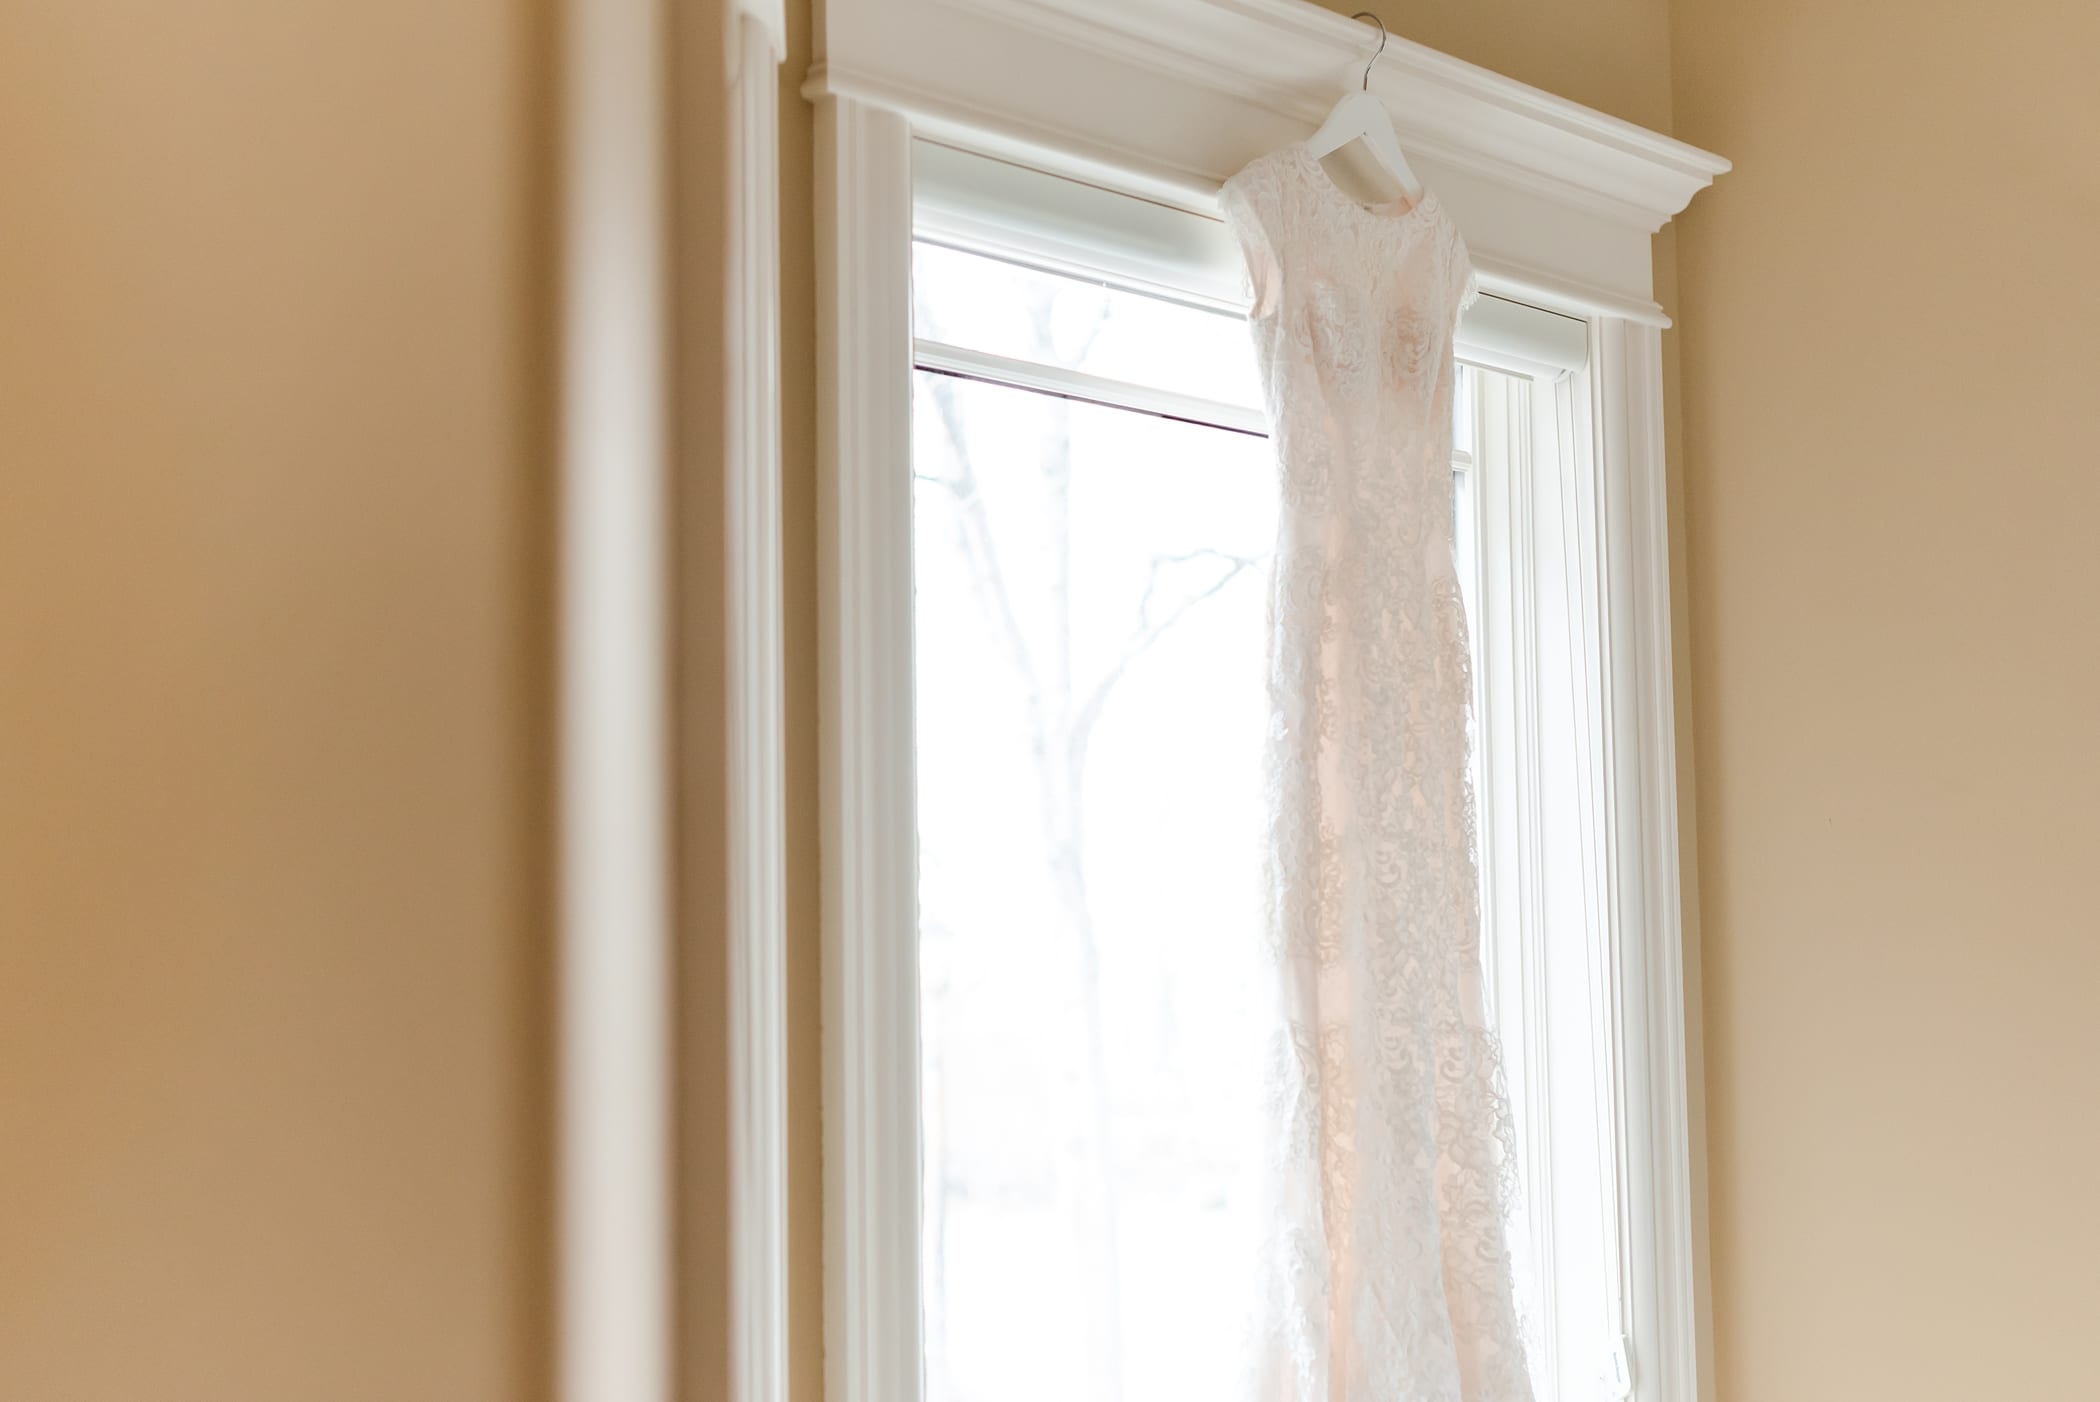 Wedding dress in window detail photo.